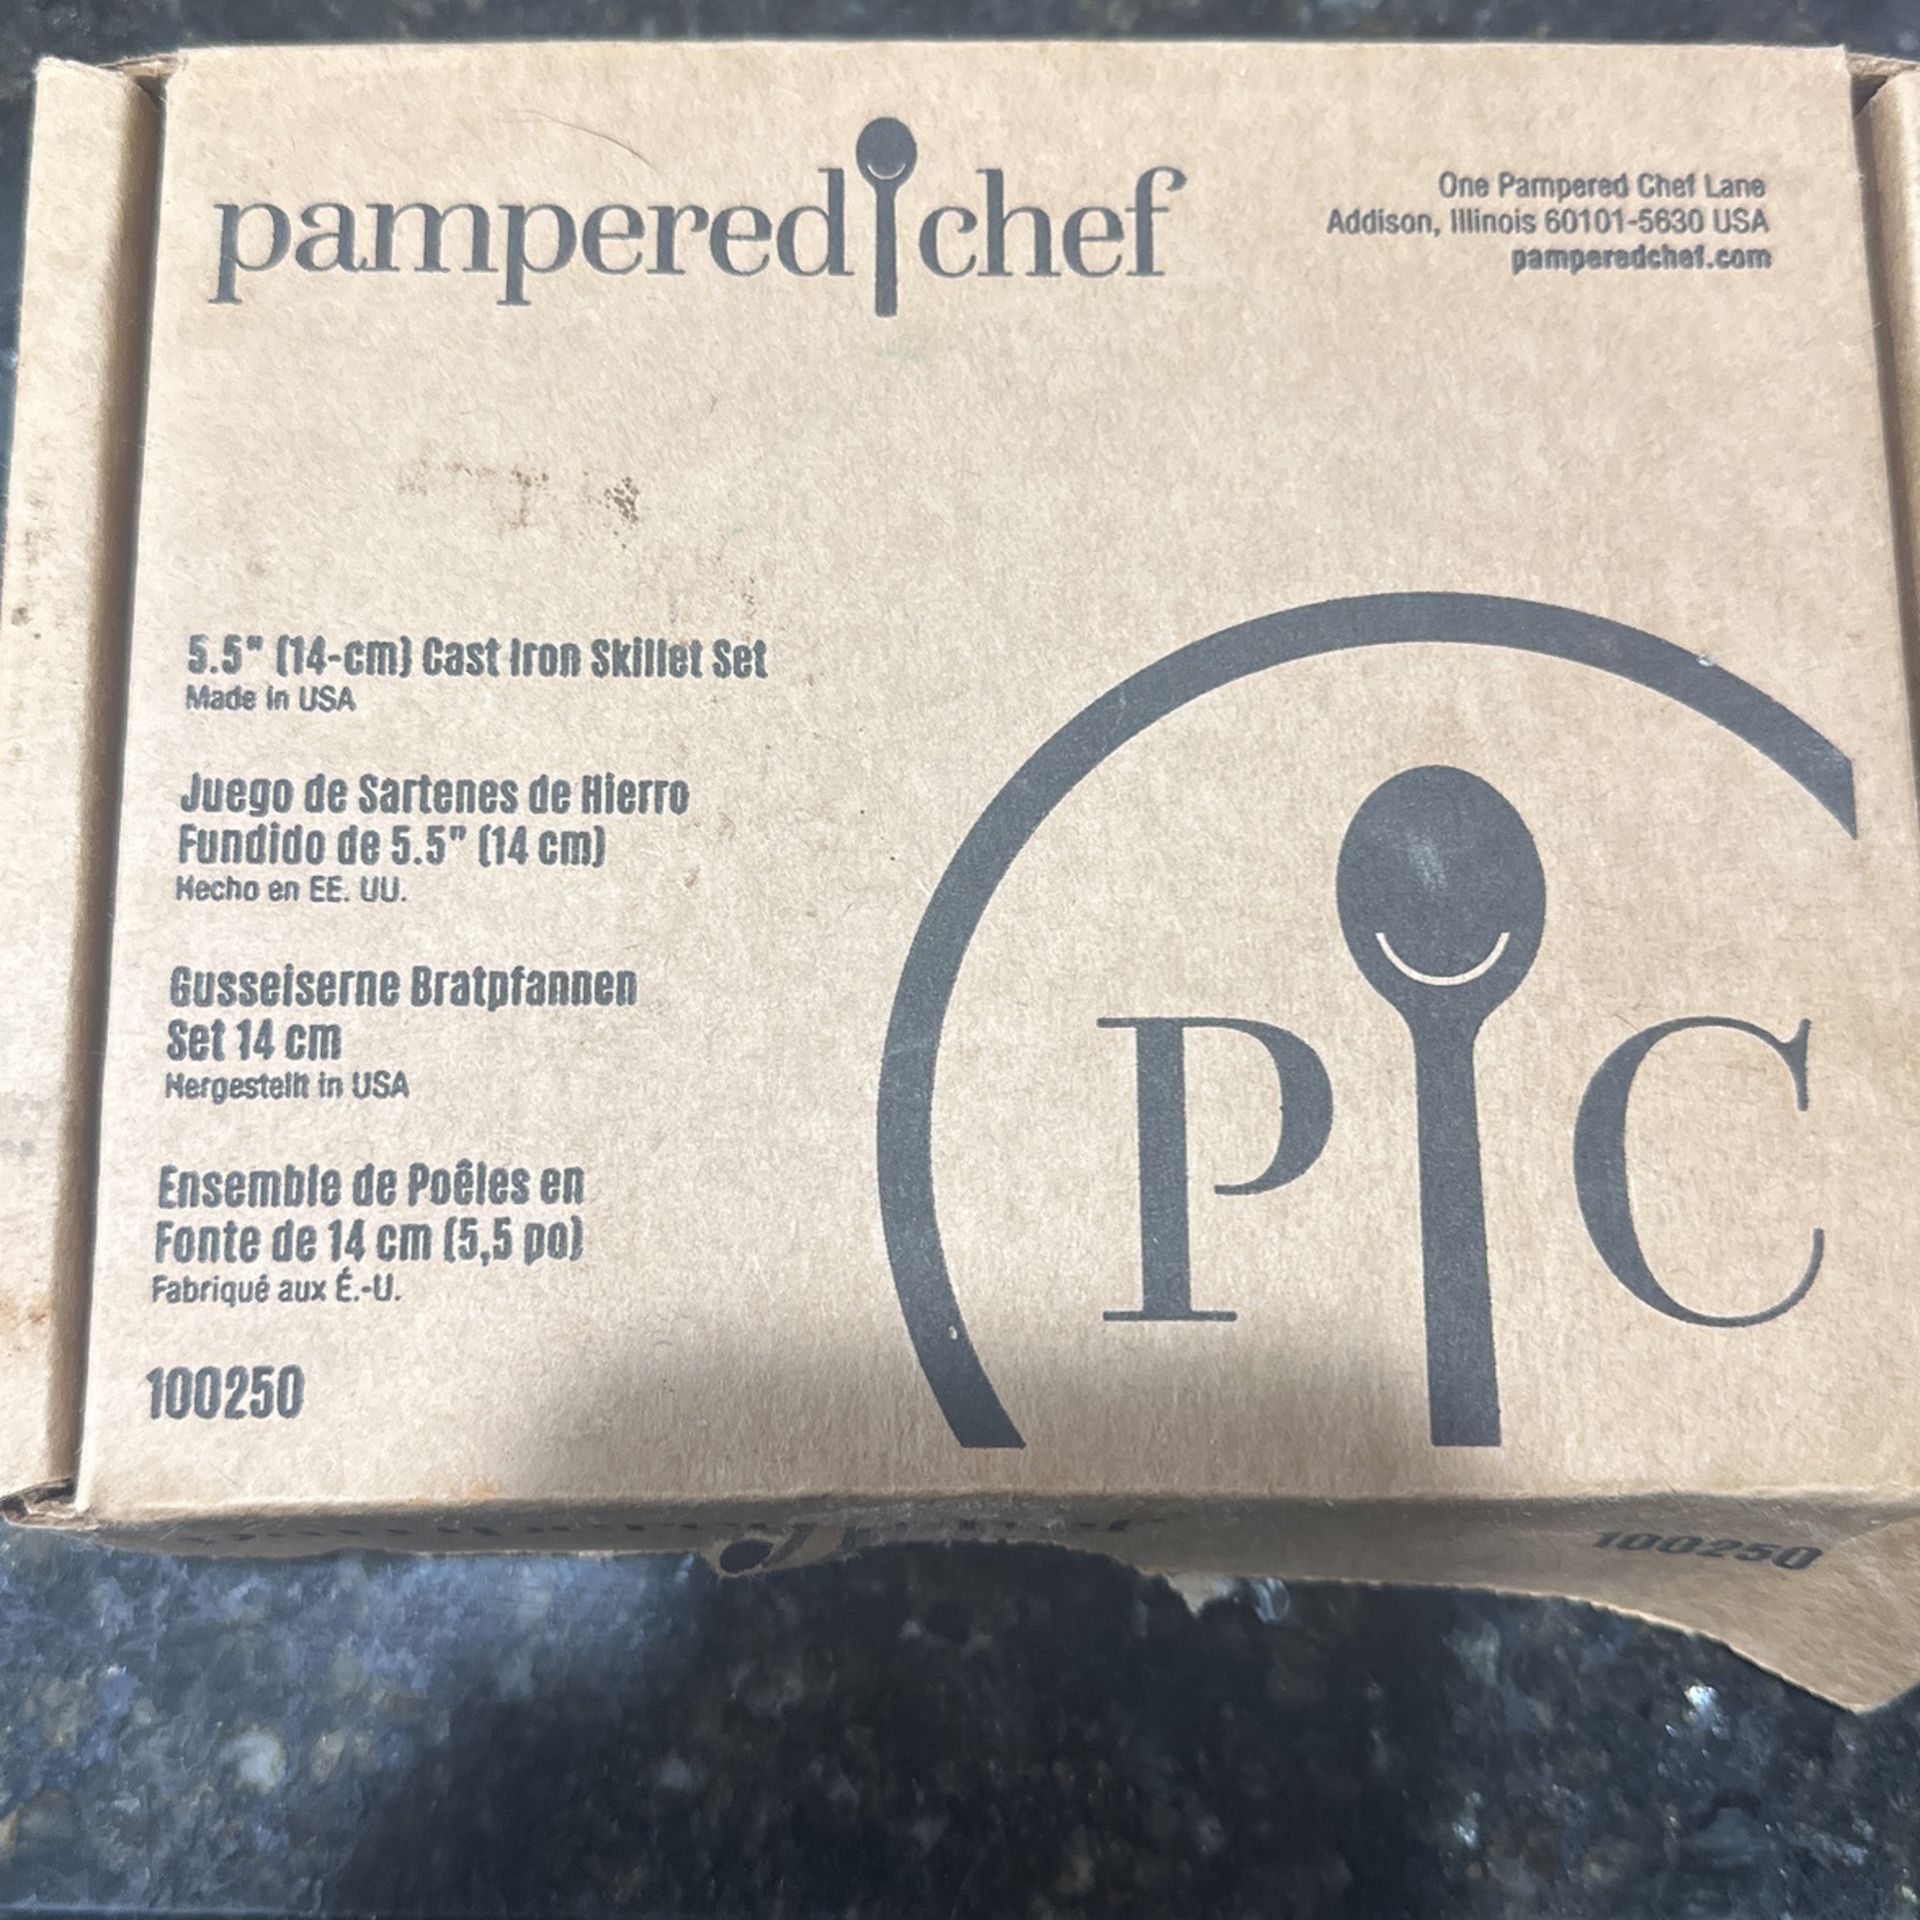 Pampered Chef 5.5 Cast Iron Skillet Set